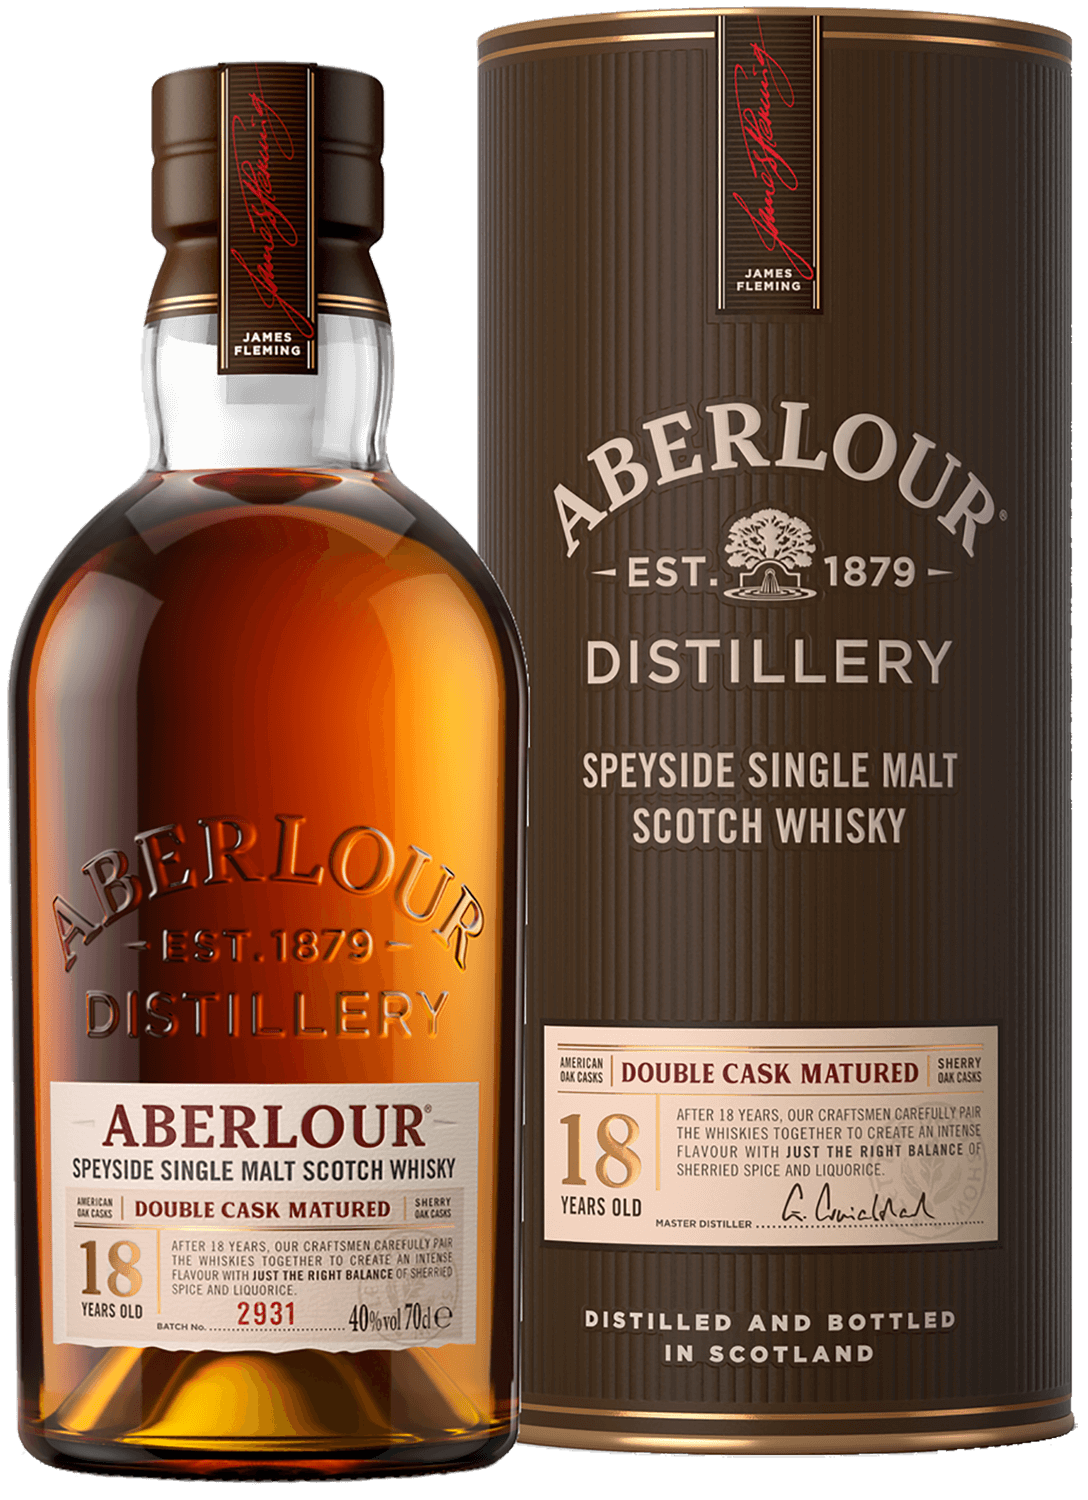 Aberlour Single Malt Scotch Whisky 18 y.o. (gift box)